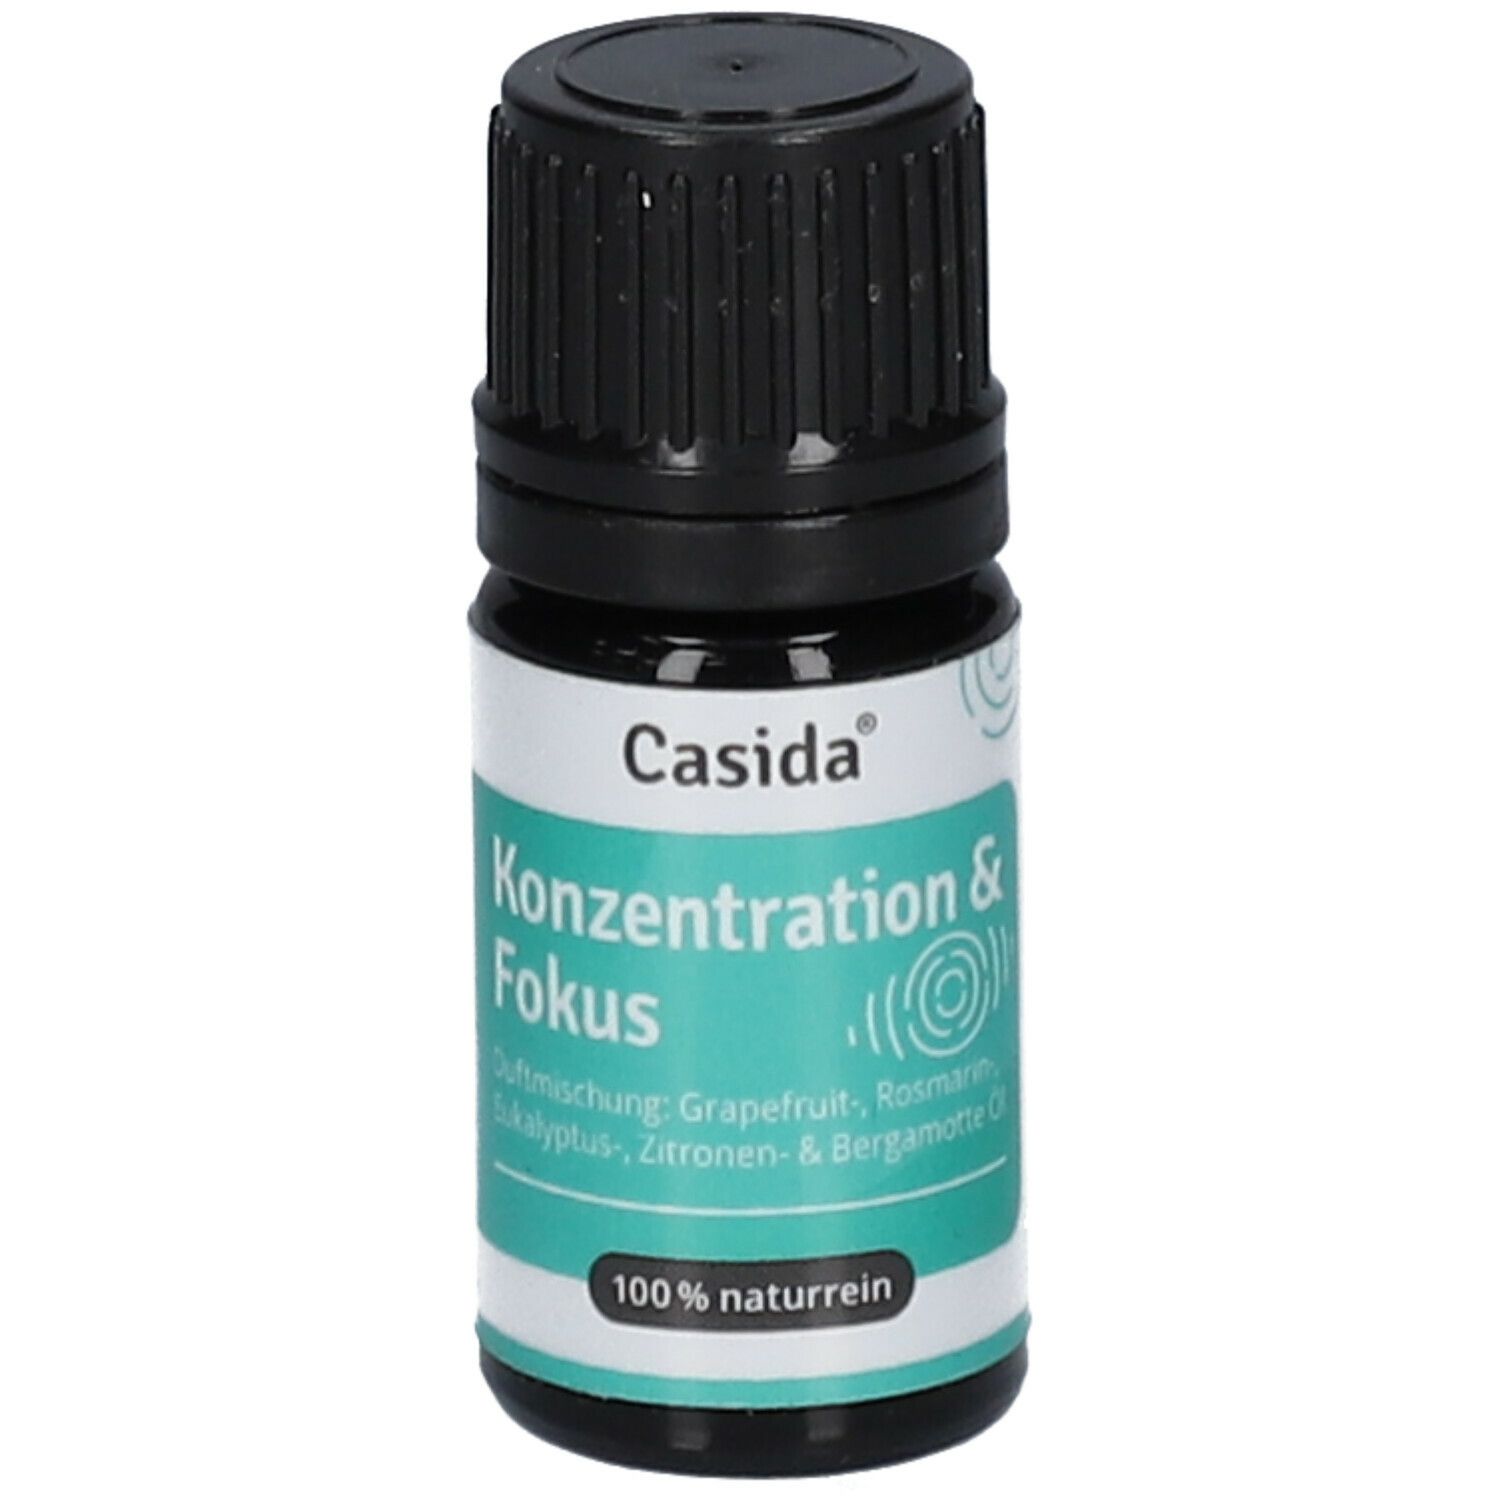 Casida® Konzentration & Fokus